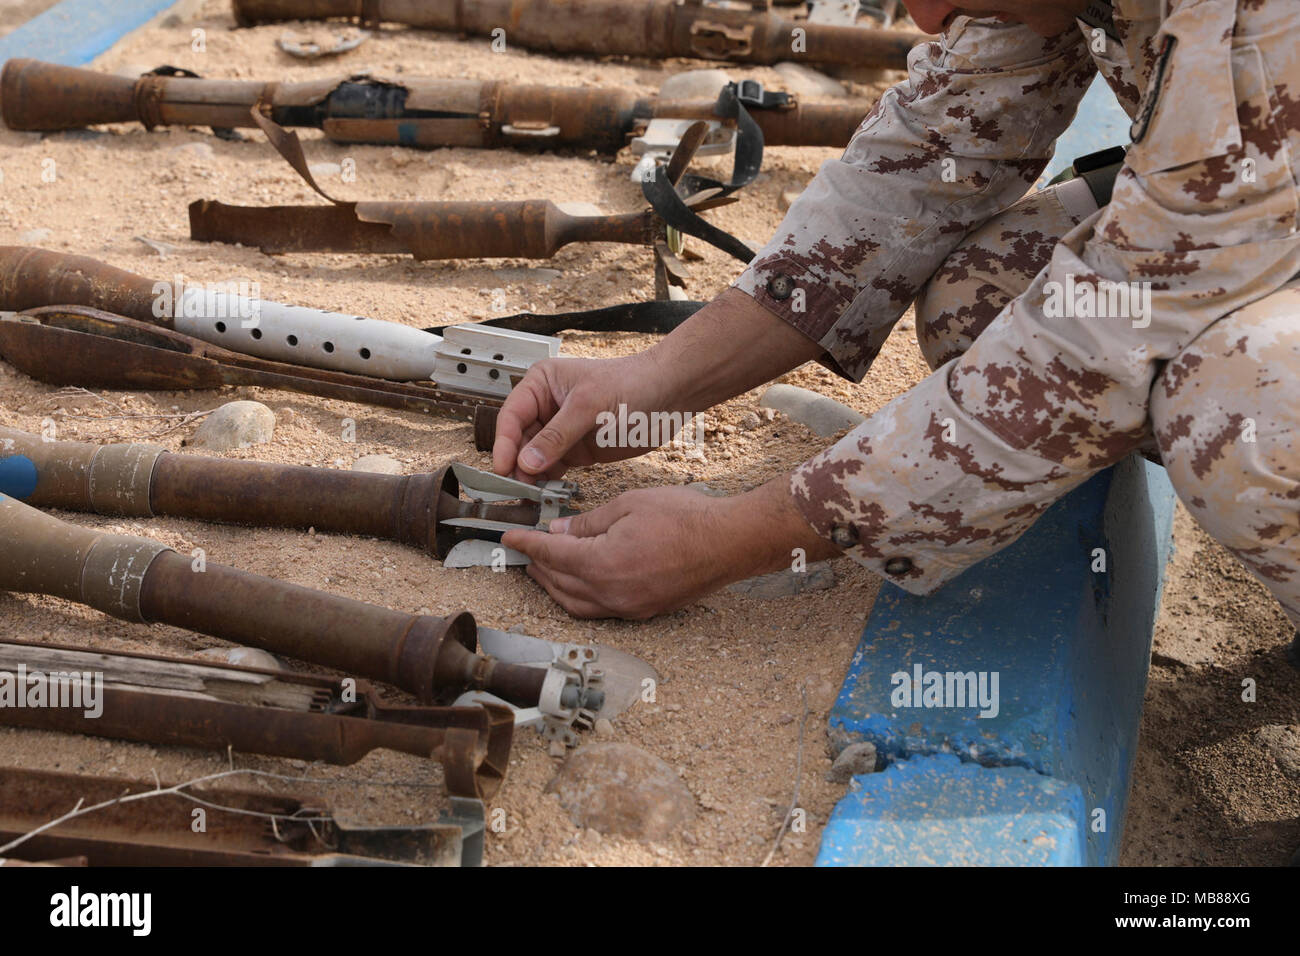 An Italian mentor checks inert rocket propelled grenade pieces as of a training area for Iraqi army students at the North Atlantic Treaty Organization (NATO) bomb disposal school, at the Besmaya